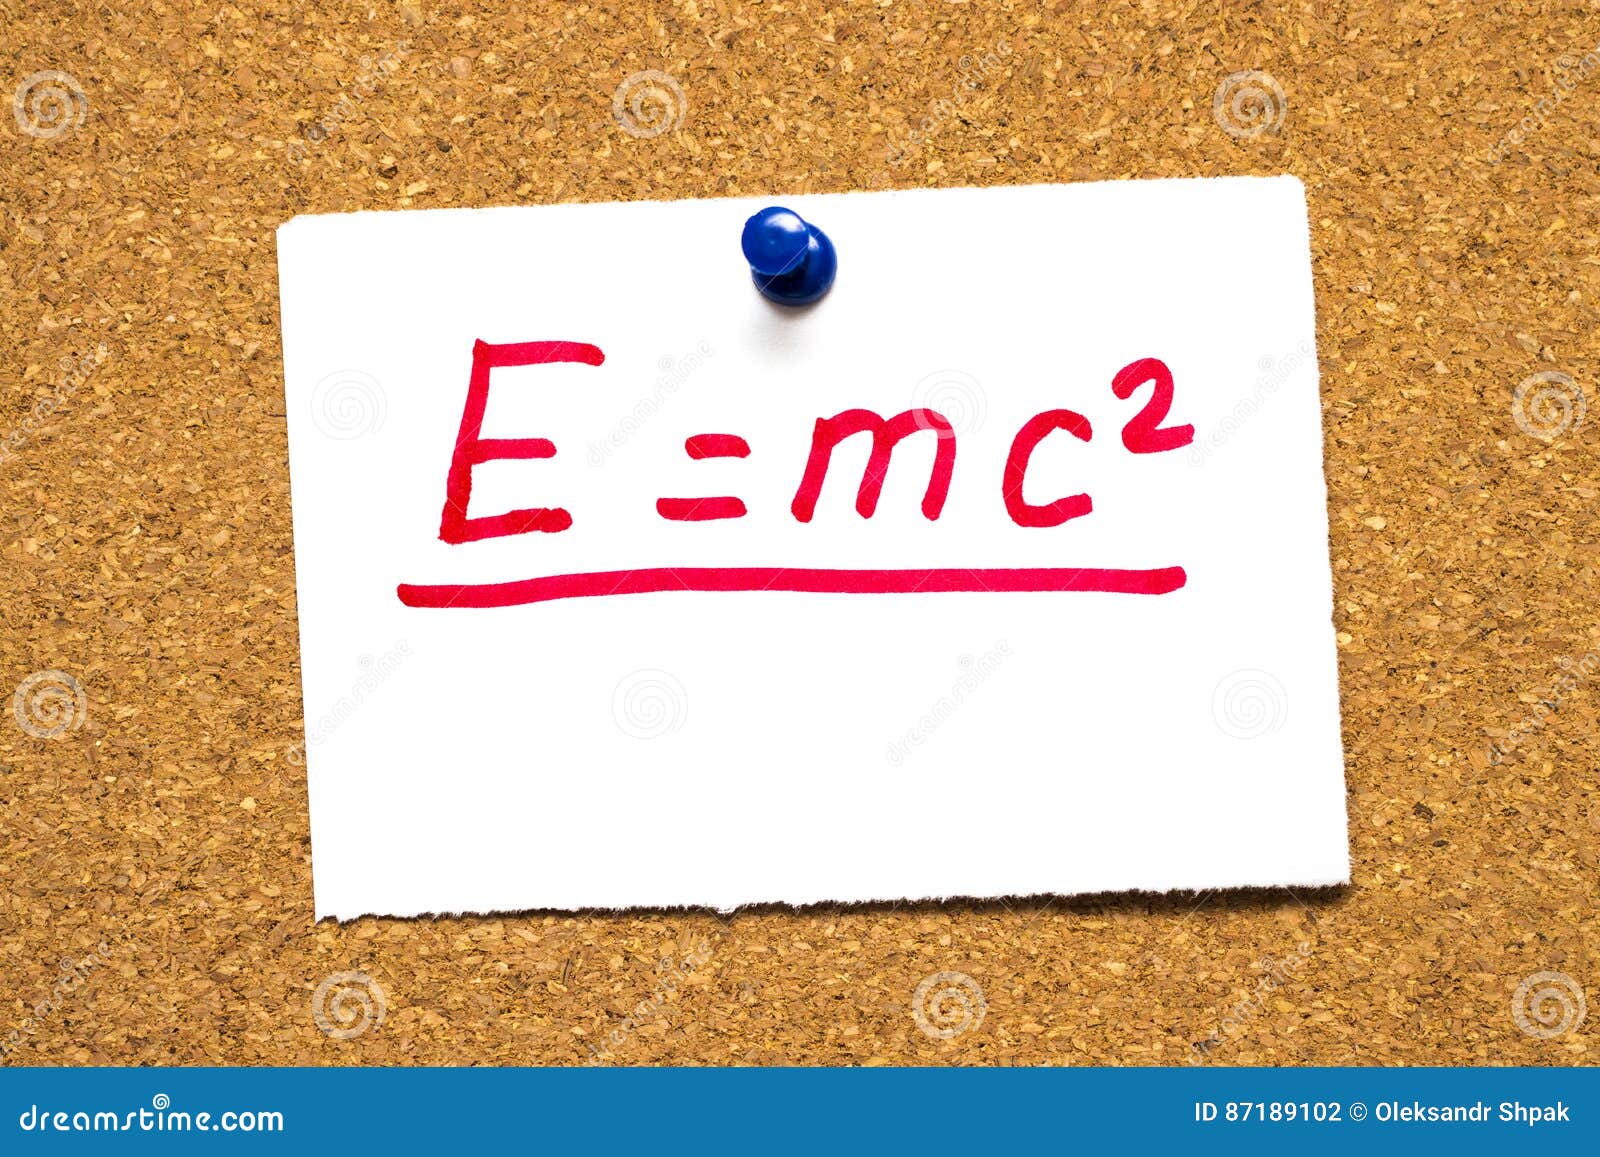 e=mc2 mass-energy equivalence